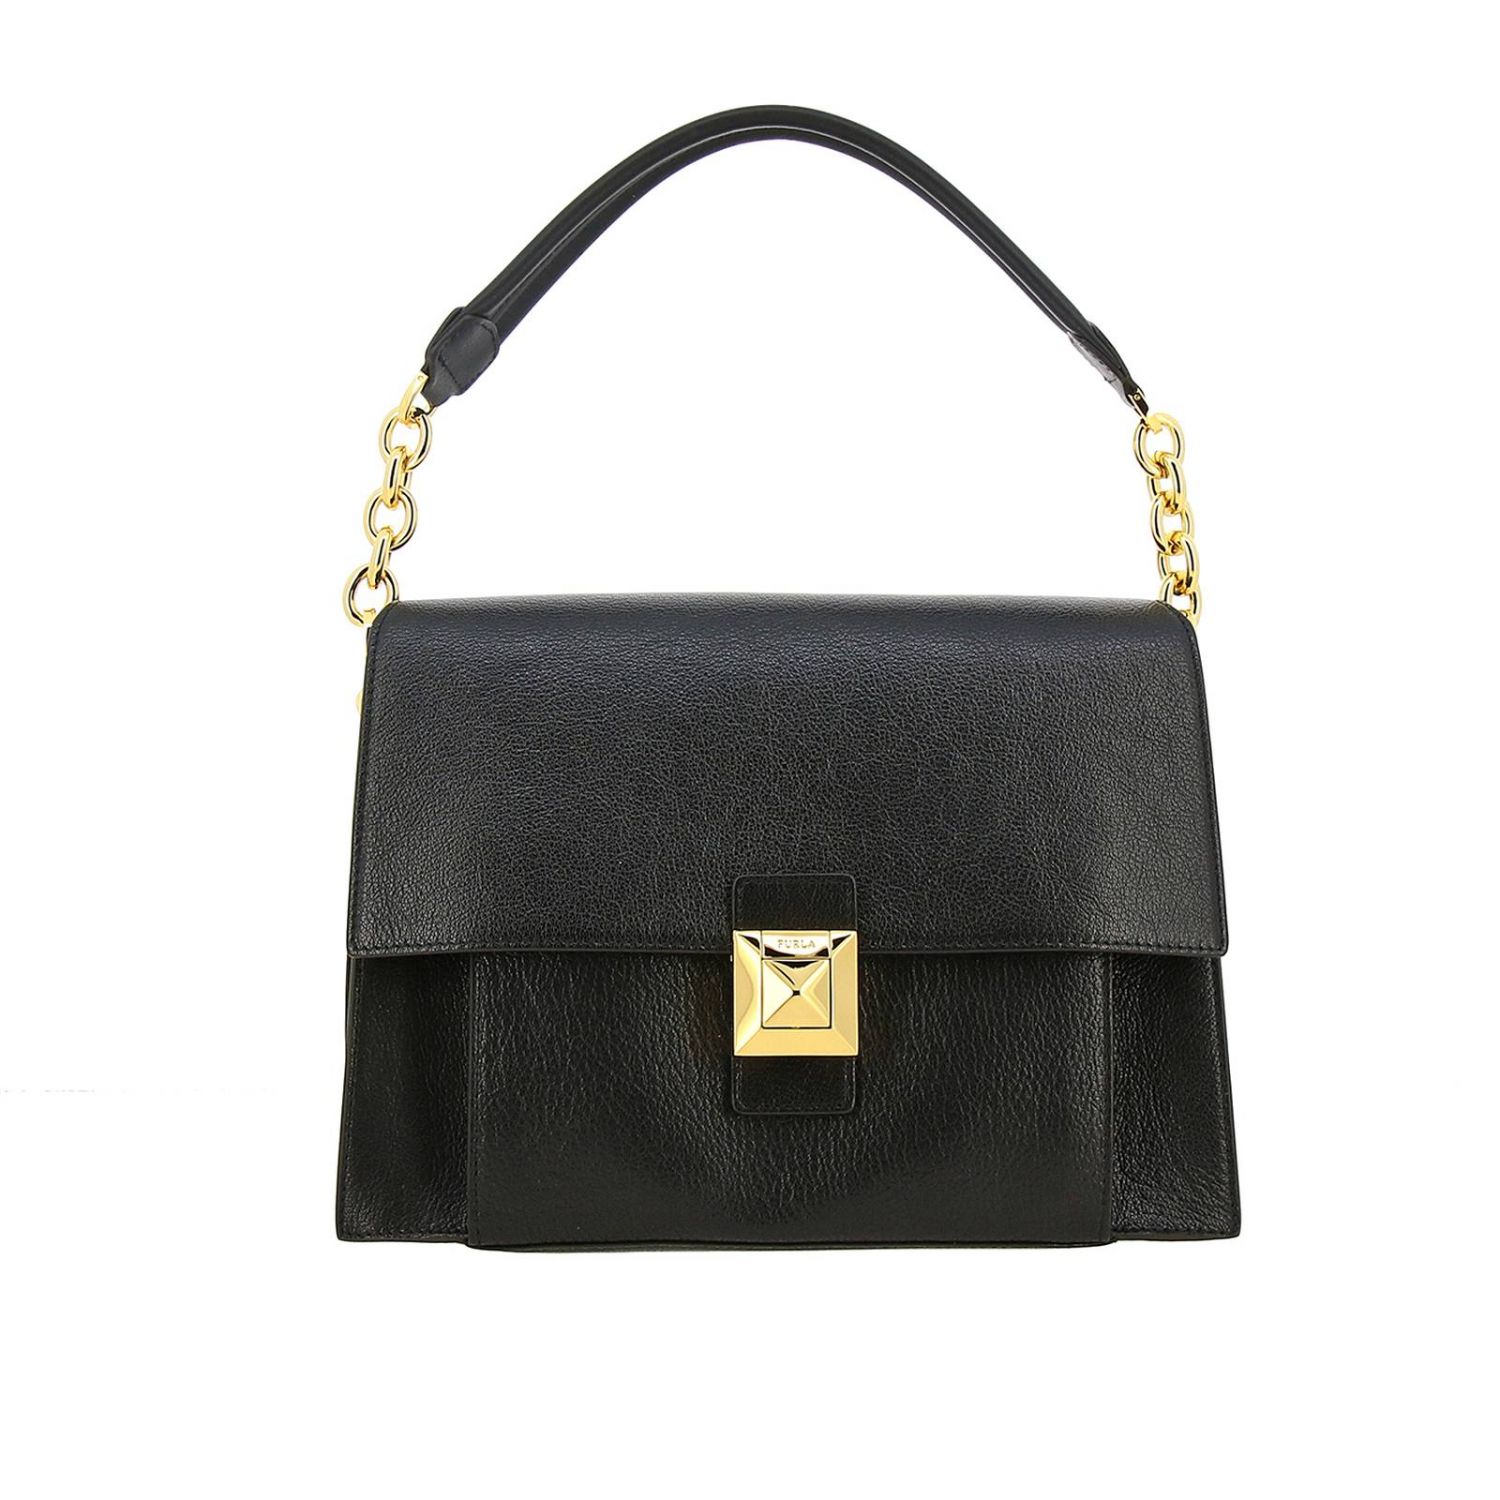 Furla Outlet: handbag for women - Black | Furla handbag 1021351 BWI8 ...